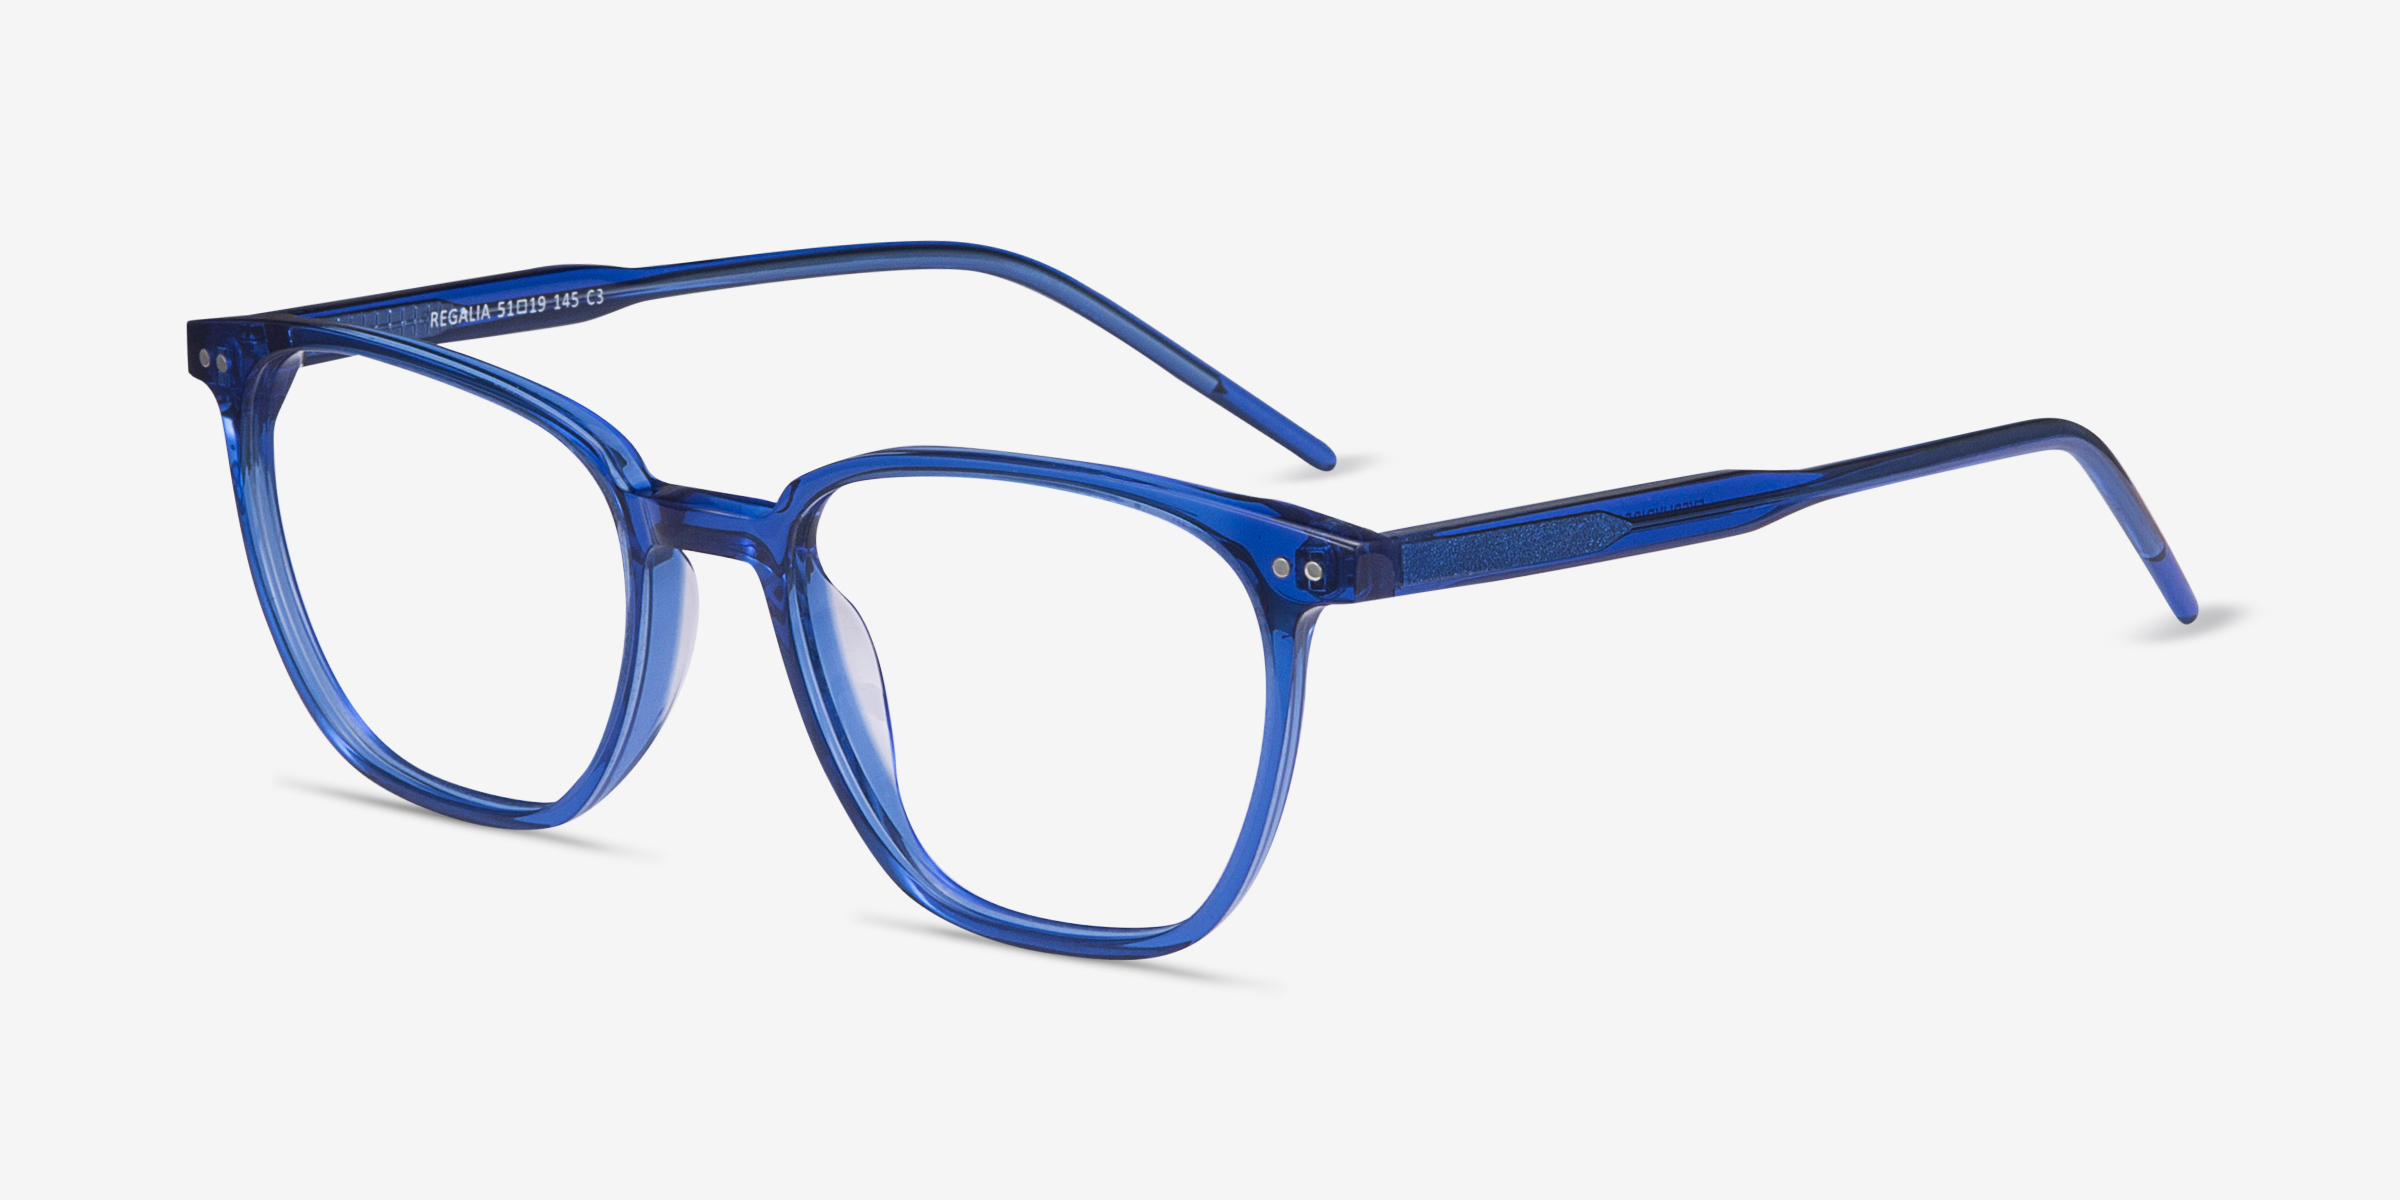 Regalia Square Blue Full Rim Eyeglasses | Eyebuydirect